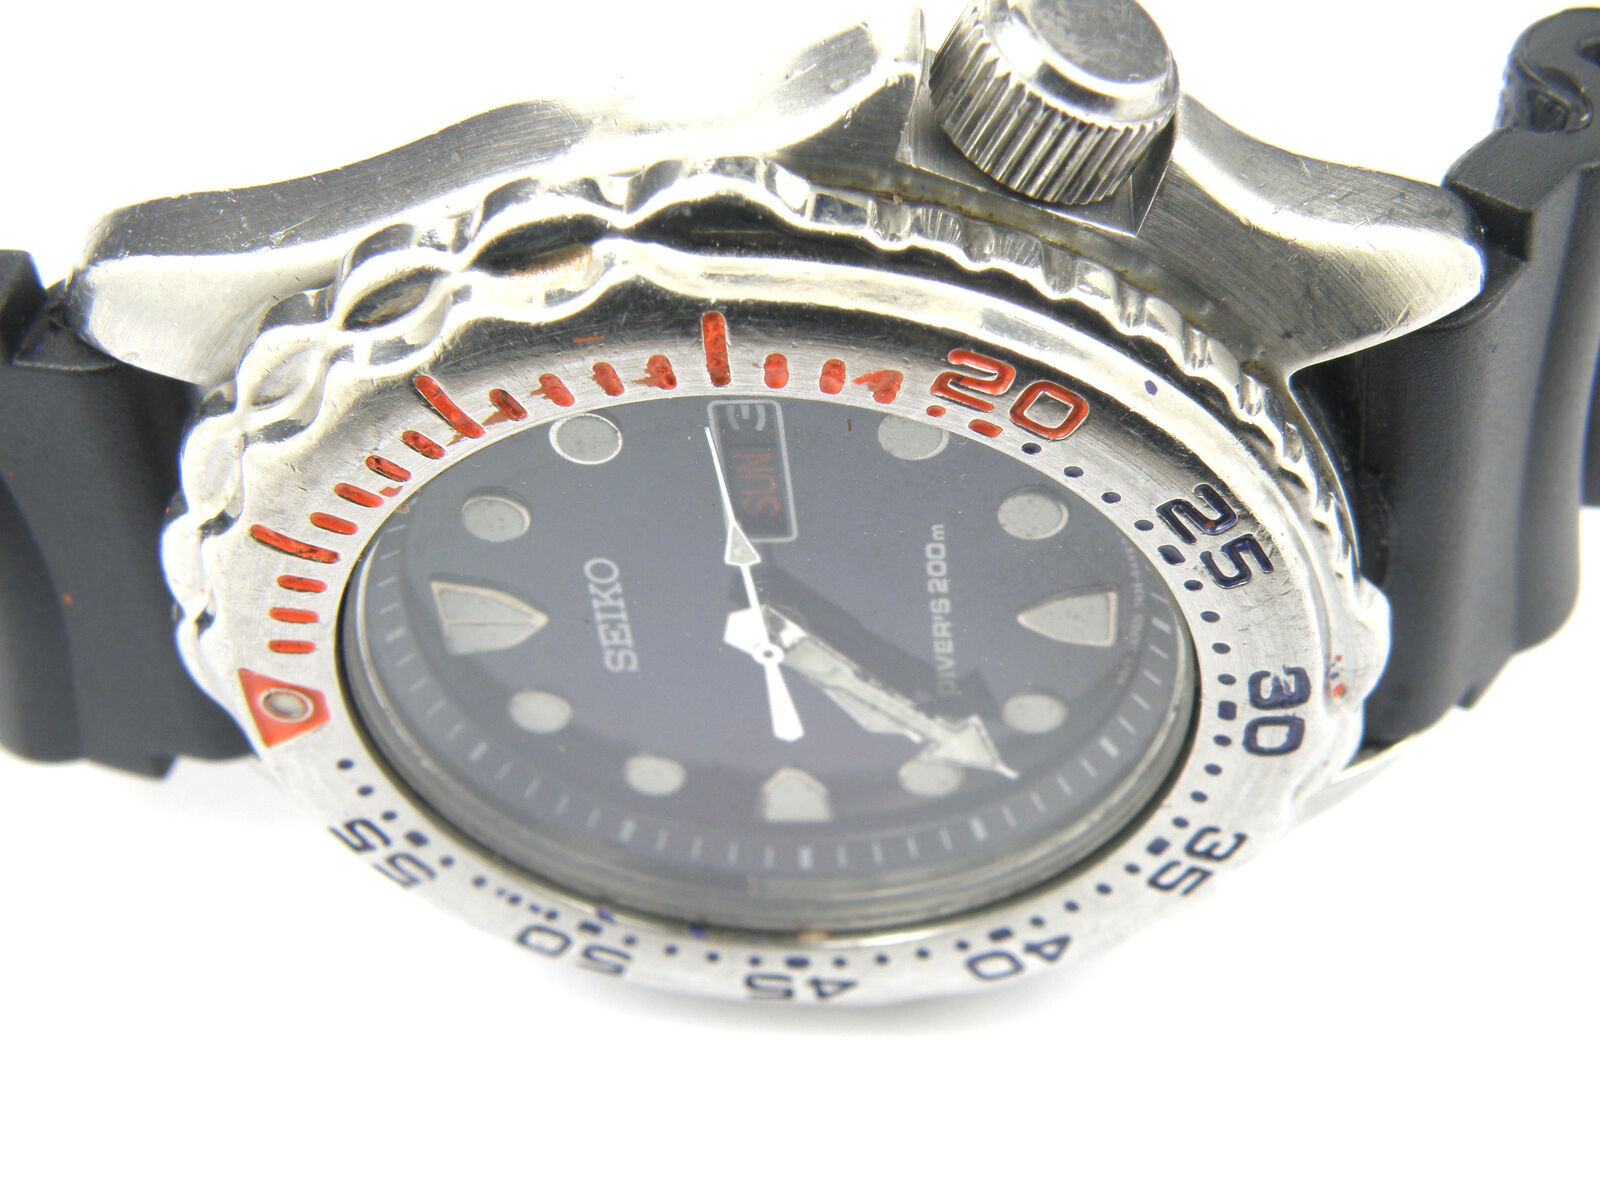 Mens Seiko 7N36-6A49 Sapphlex Scuba Divers Quartz Watch - 200m | eBay